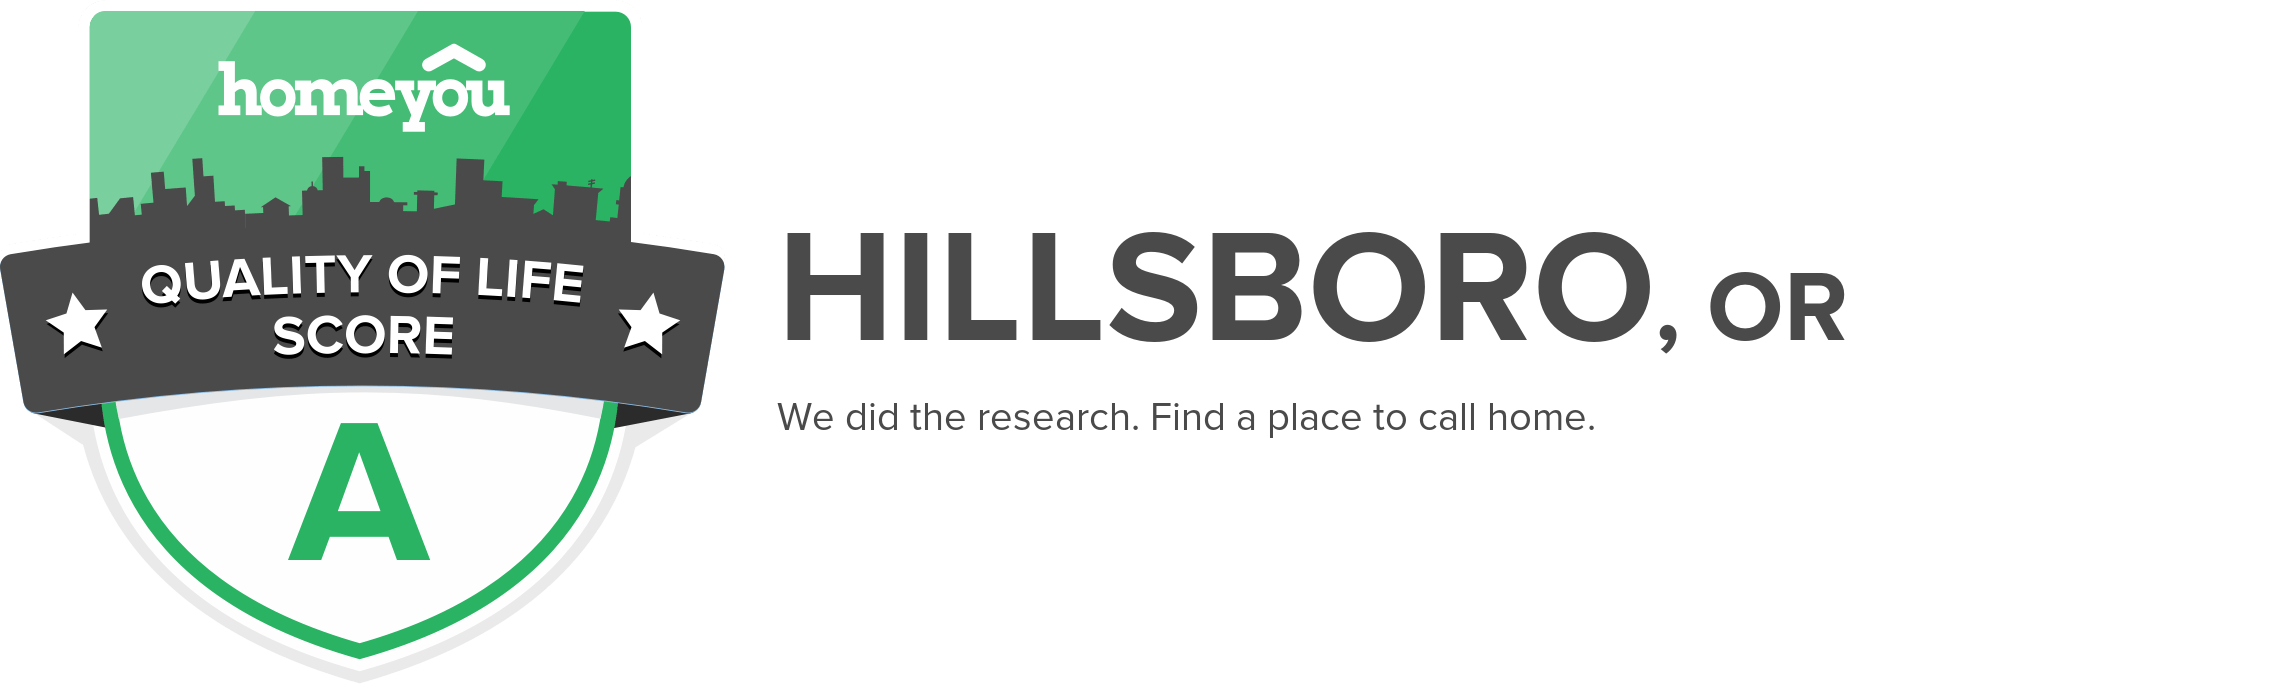 Hillsboro, OR